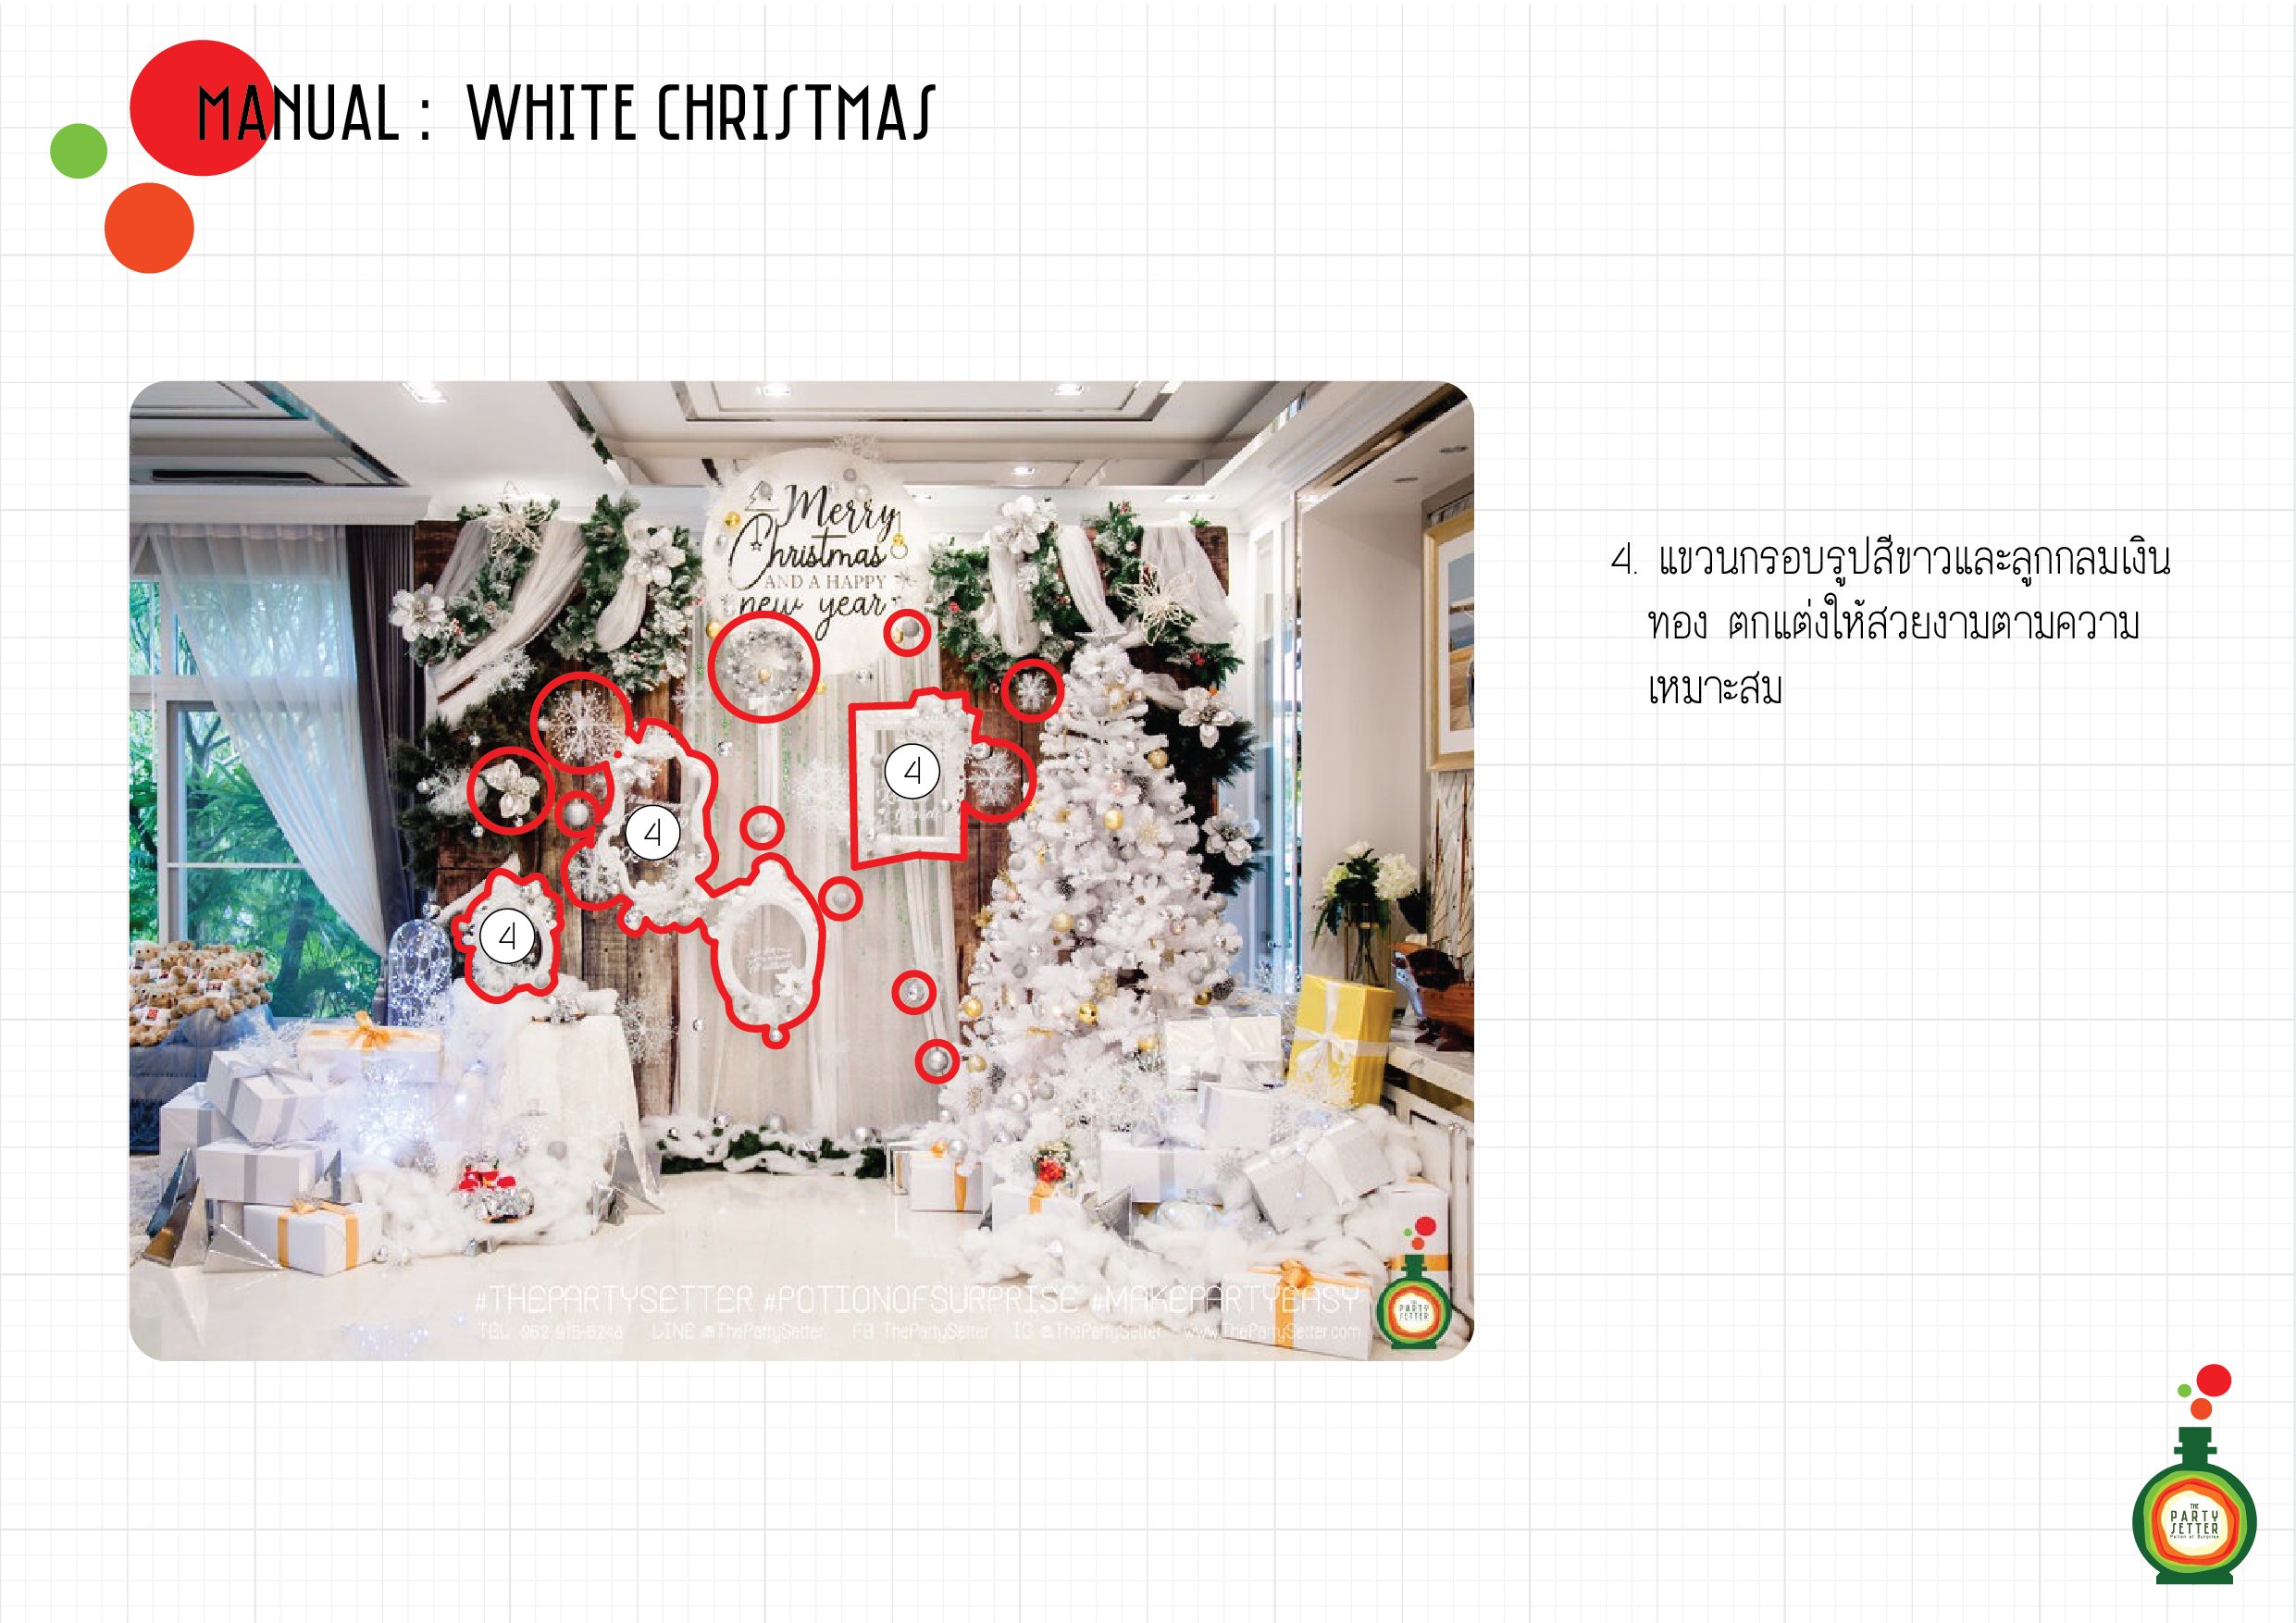 Manual_White Christmas-04-01.jpg